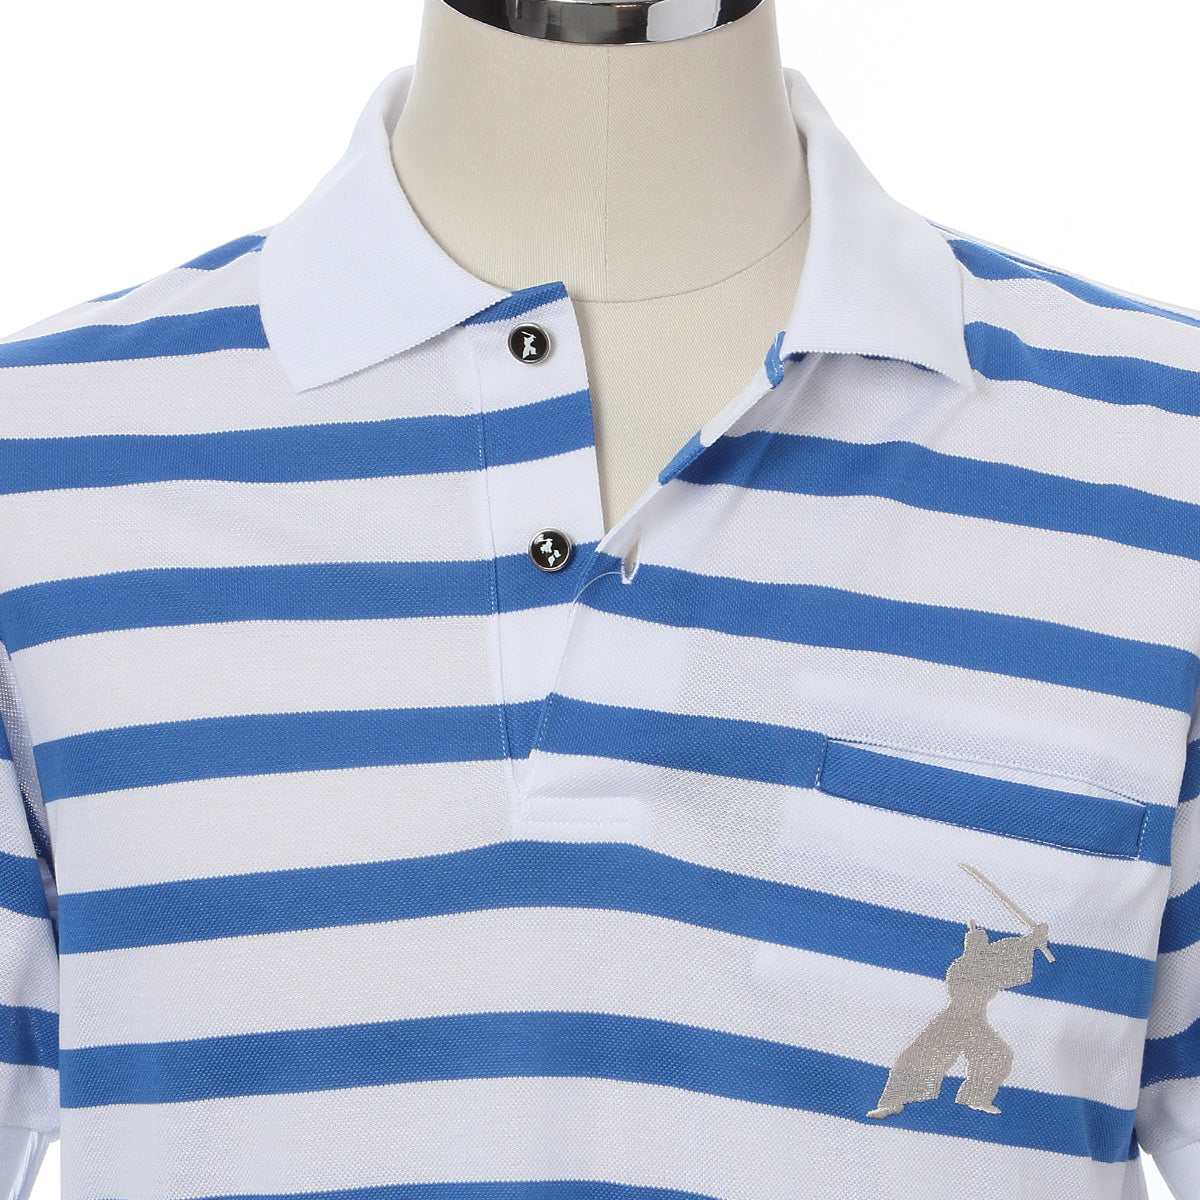 Men’s Short Sleeve Cotton Sports Polo Shirt -16. Samurai Design Striped Blue & White Made in Japan FORTUNA Tokyo